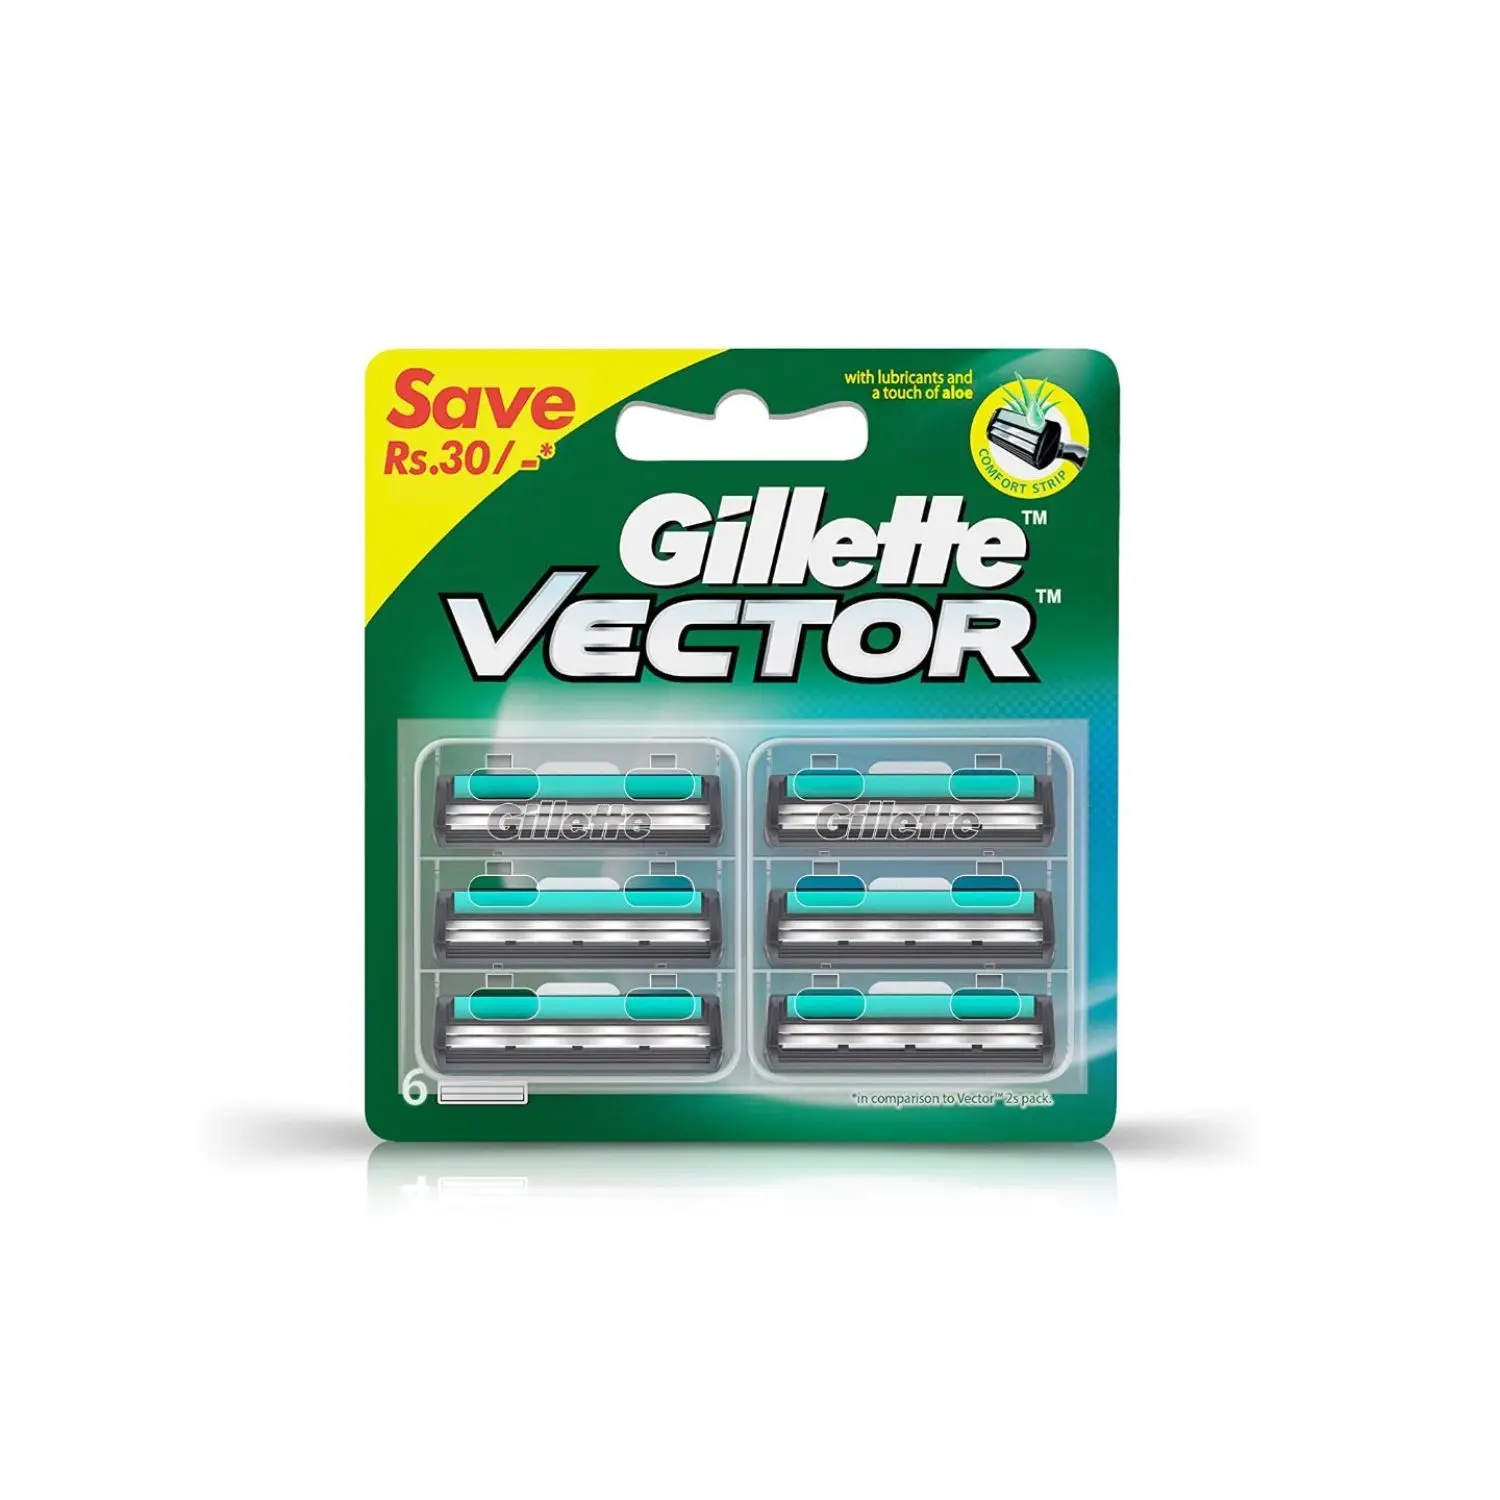 Gillette Vector plus Manual Shaving Razor Blades (Cartridge) 6s pack